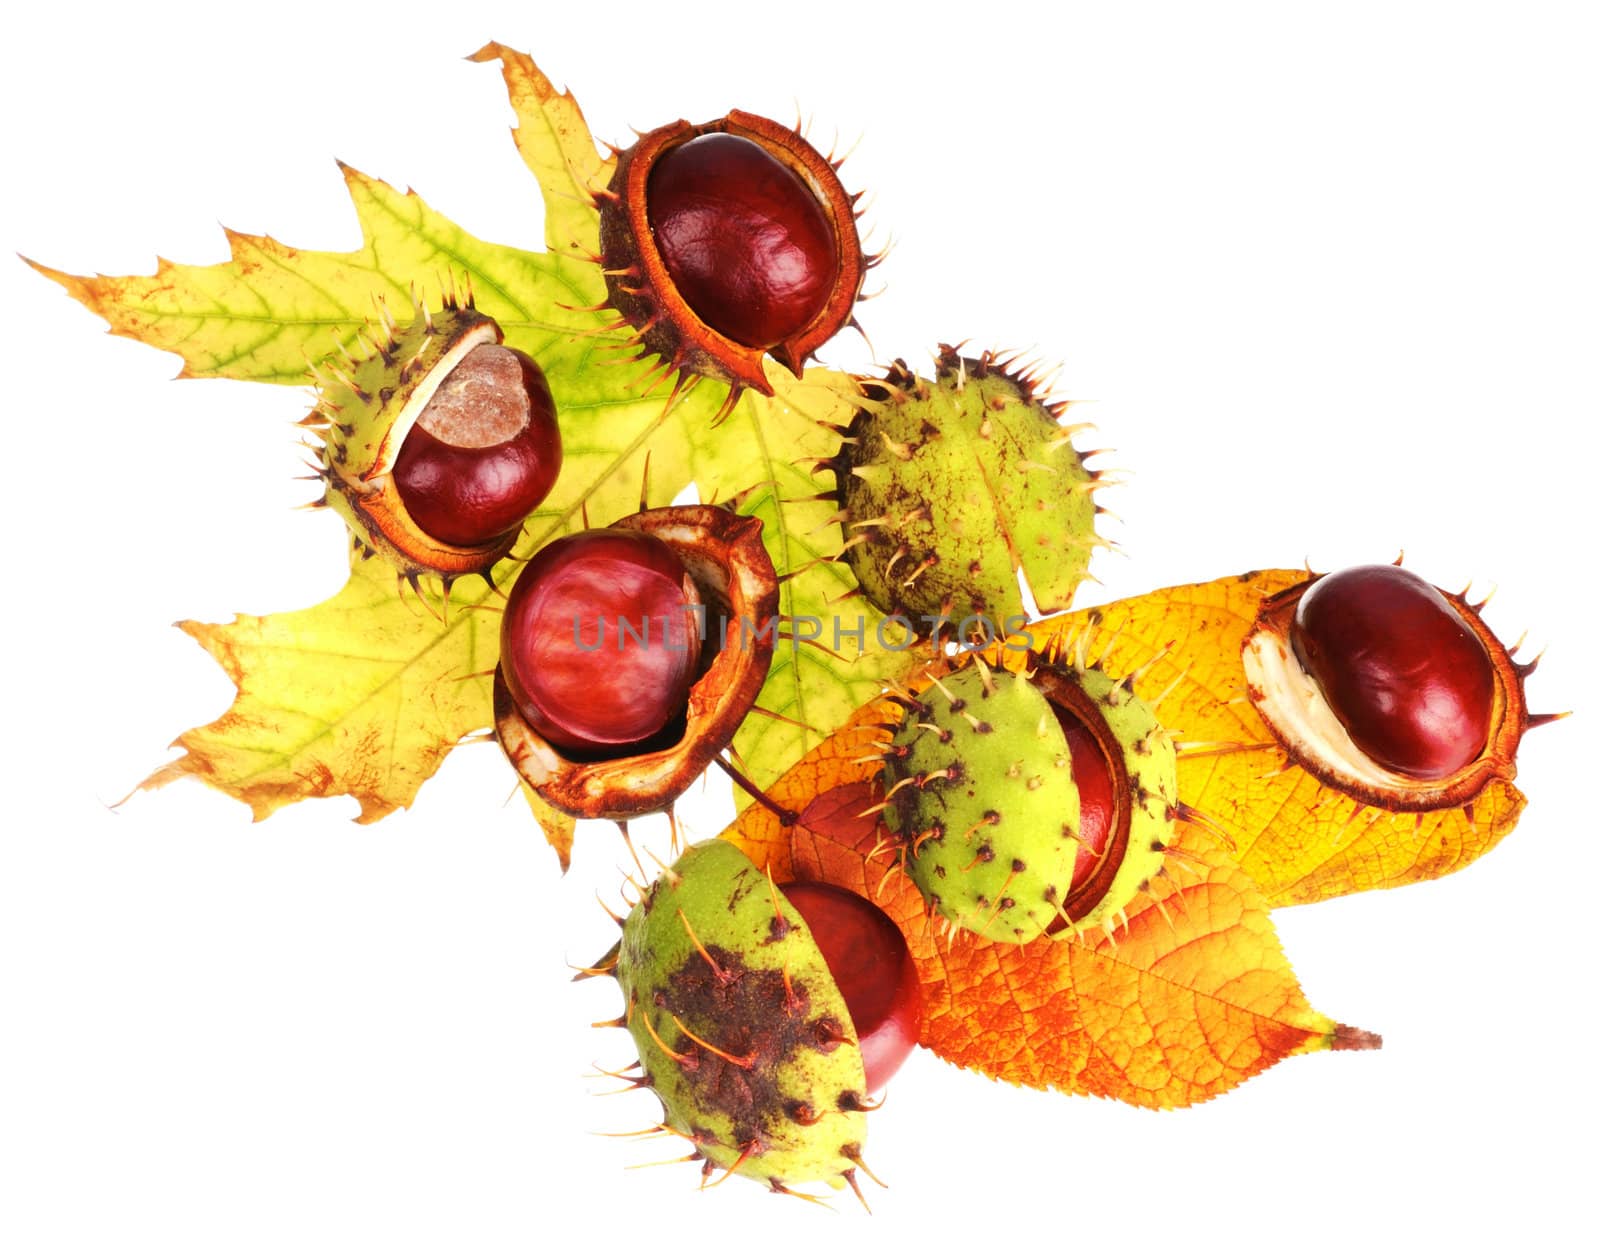 Chestnuts in peel on leaves by iryna_rasko